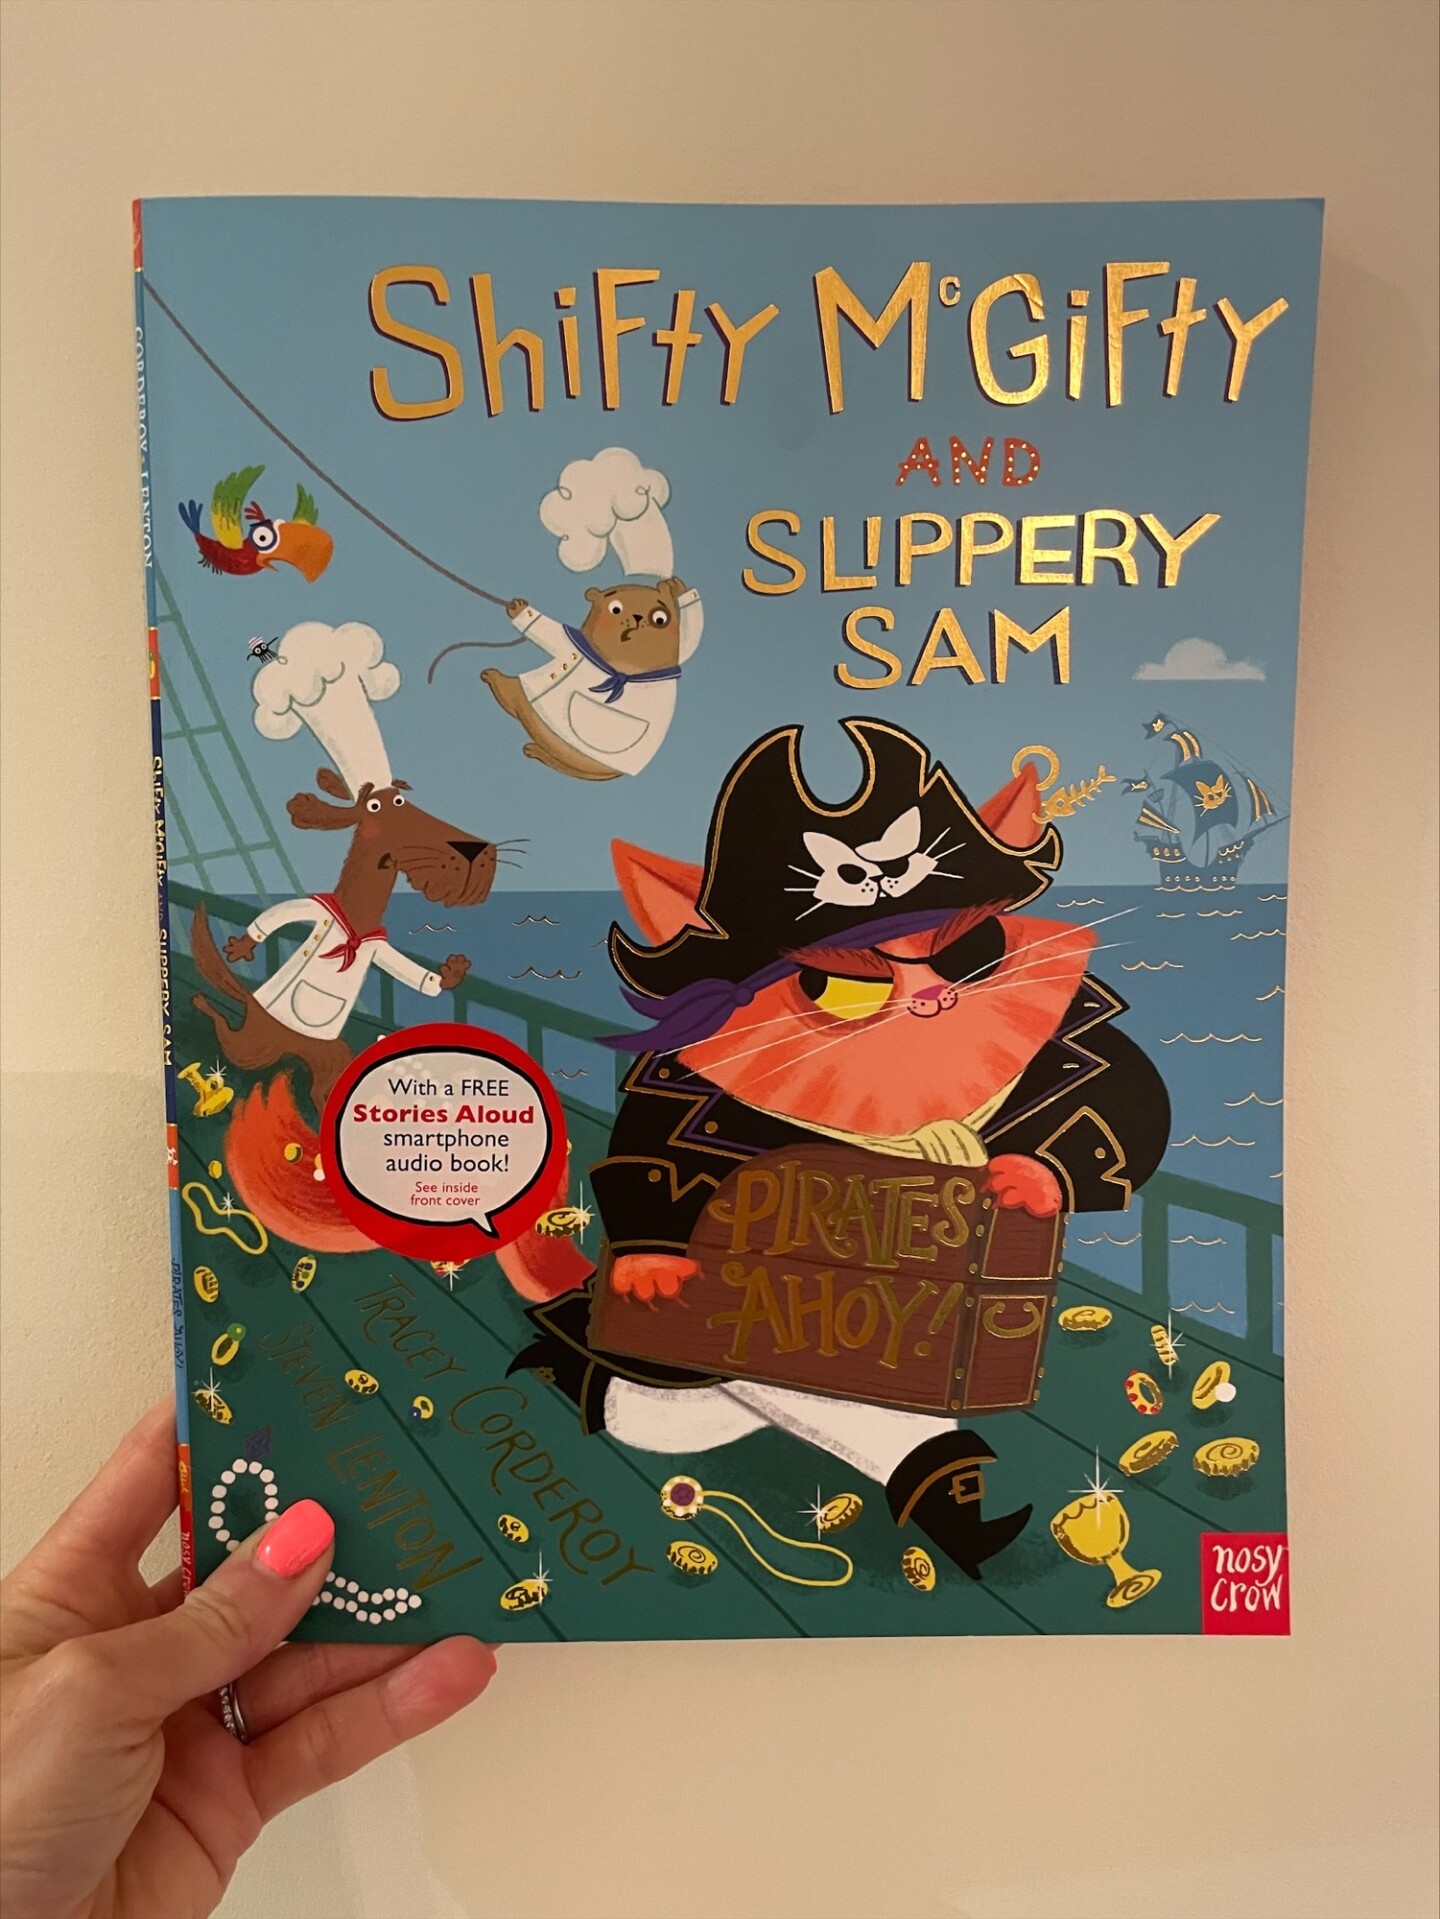 Shifty McGifty and Slippery Sam – Pirates Ahoy!